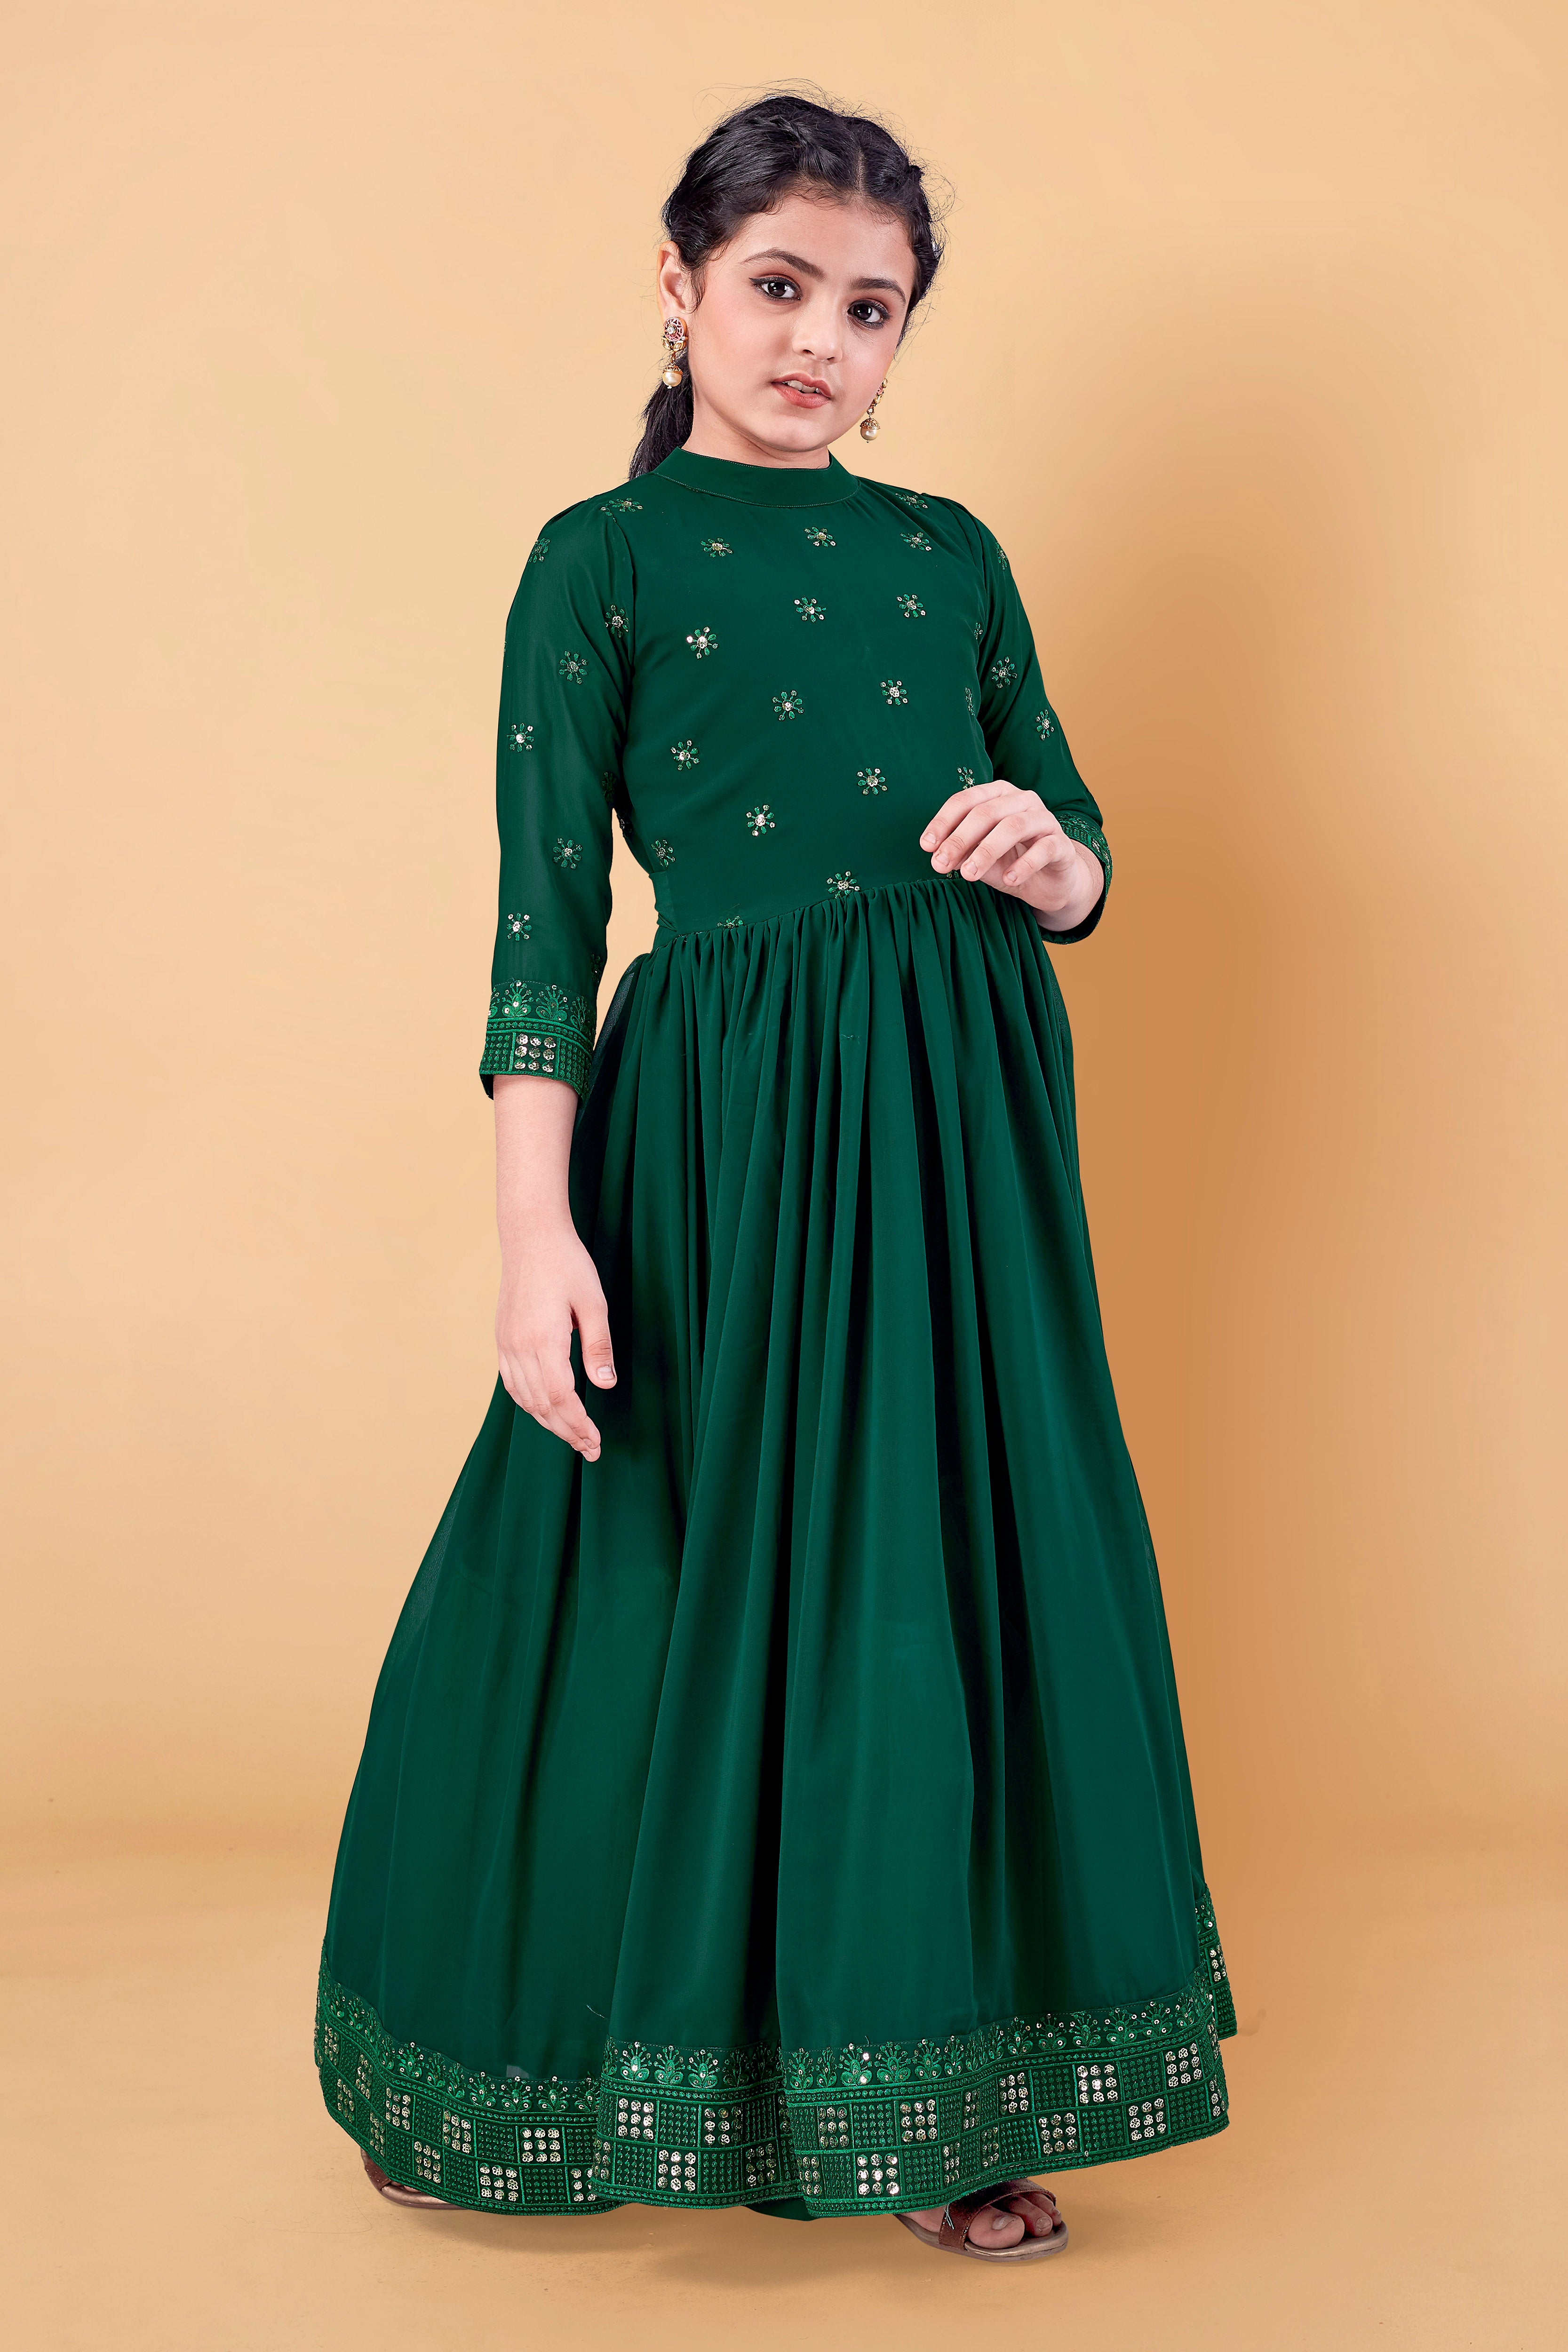 Haldi Dress For Girl - Buy Haldi Dress For Girl online at Best Prices in  India | Flipkart.com